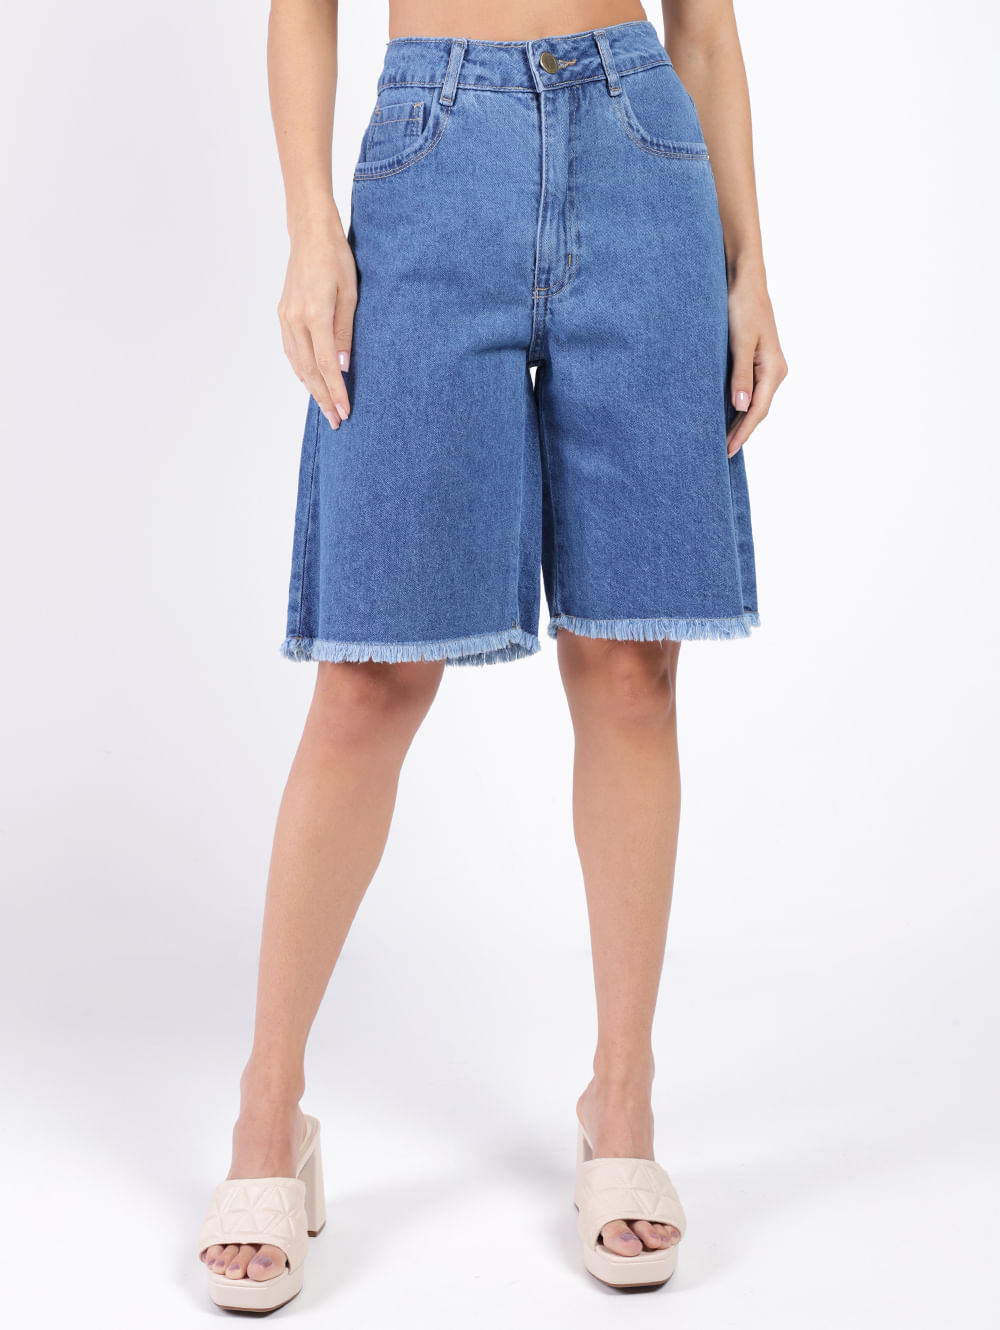 Womens Jeans Moda Pitusa Dollhause Pantalon de Mujer media Pierna Mezclilla  azul 